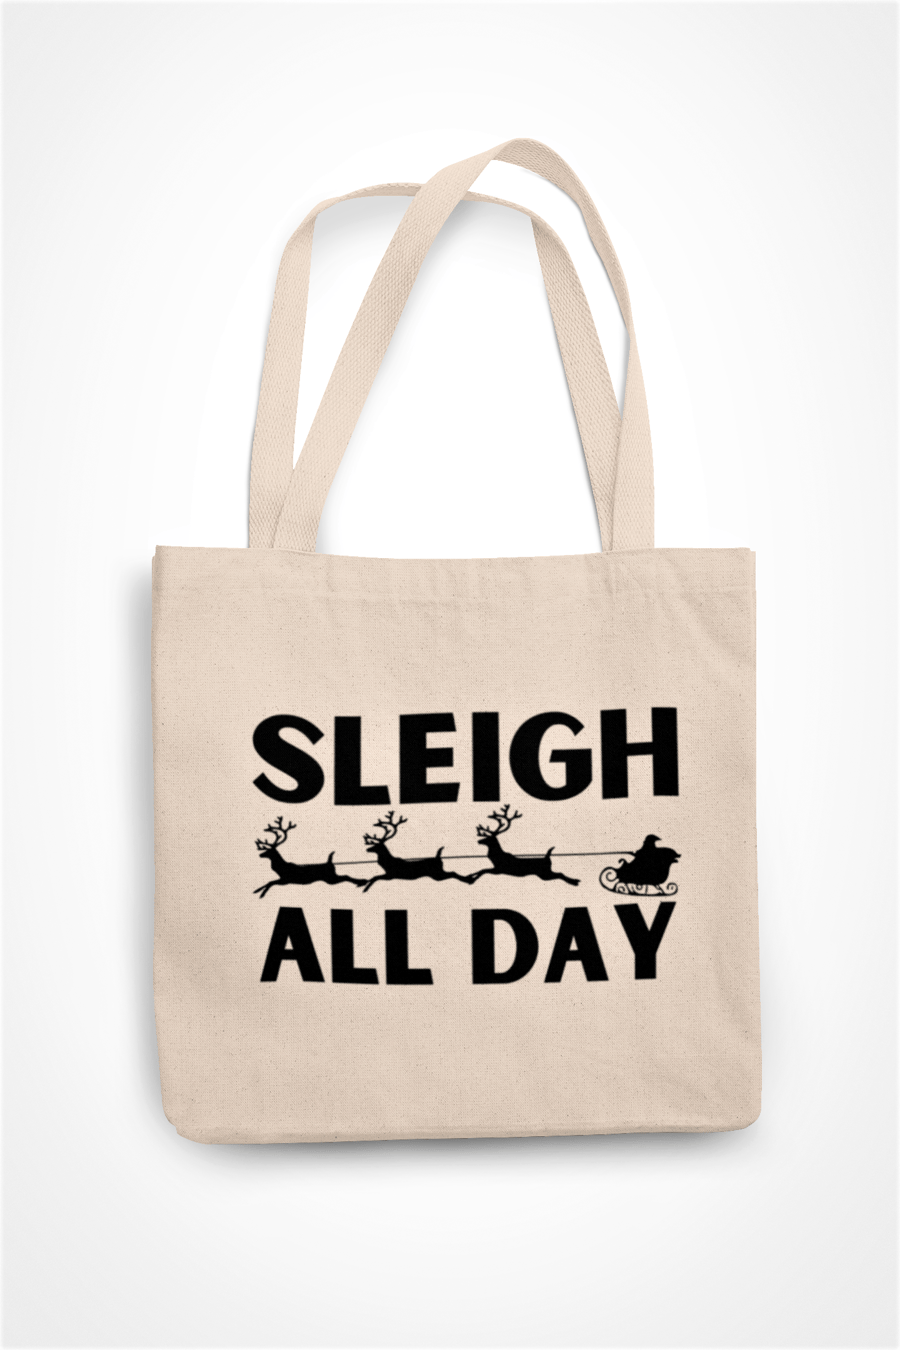 Sleigh All DAY- Novelty Christmas Tote Bag - Shopper Bag xmas Gift